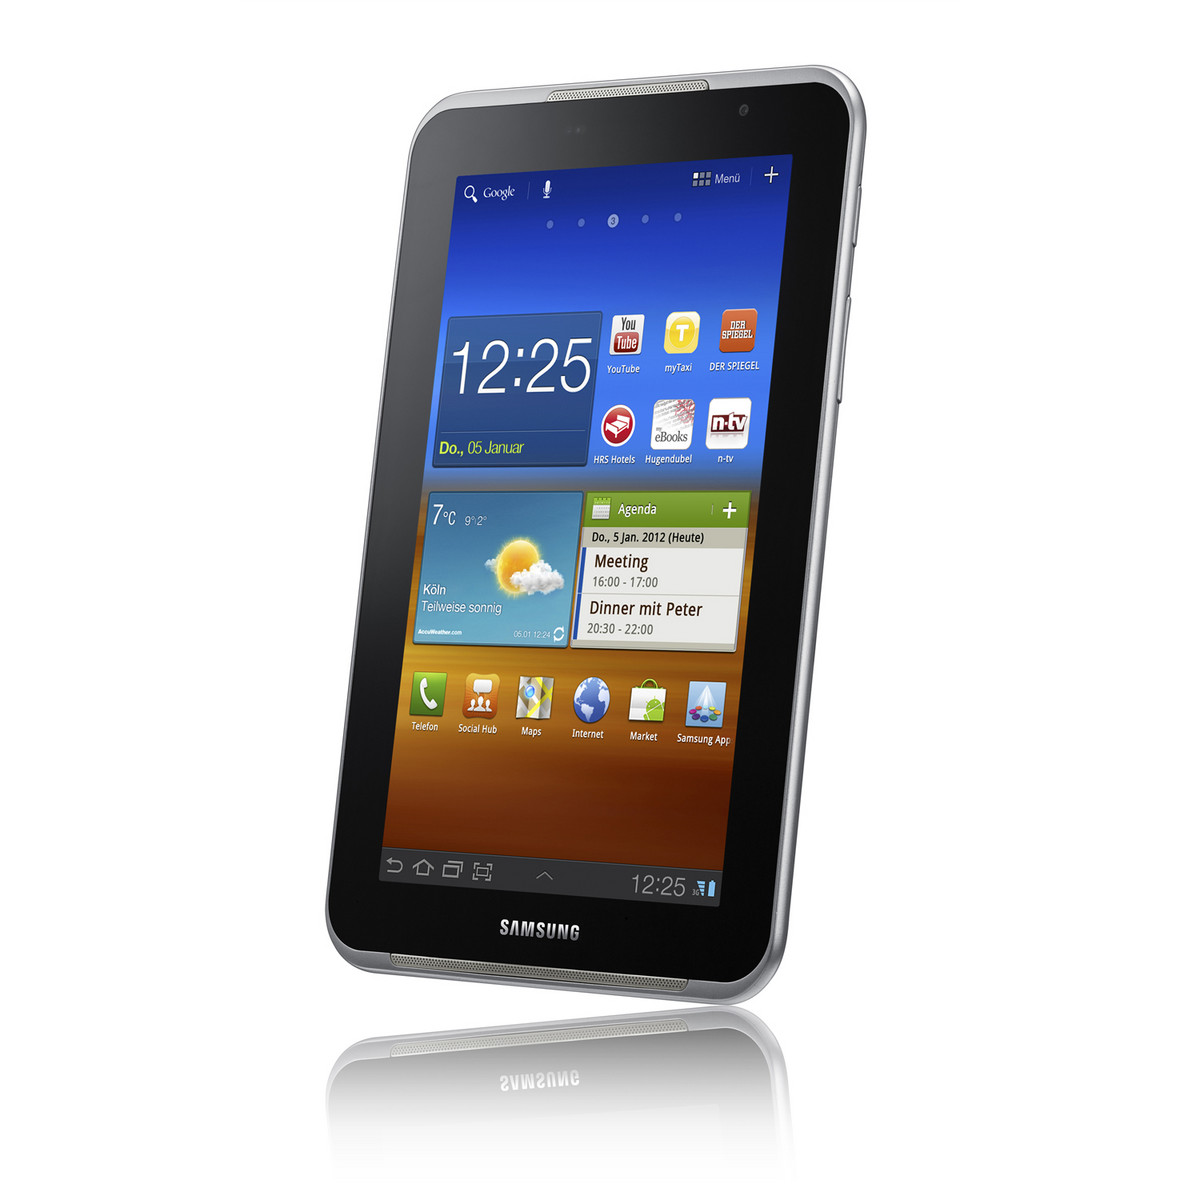 Samsung Galaxy Tab 7.0 - Notebookcheck.net Reviews